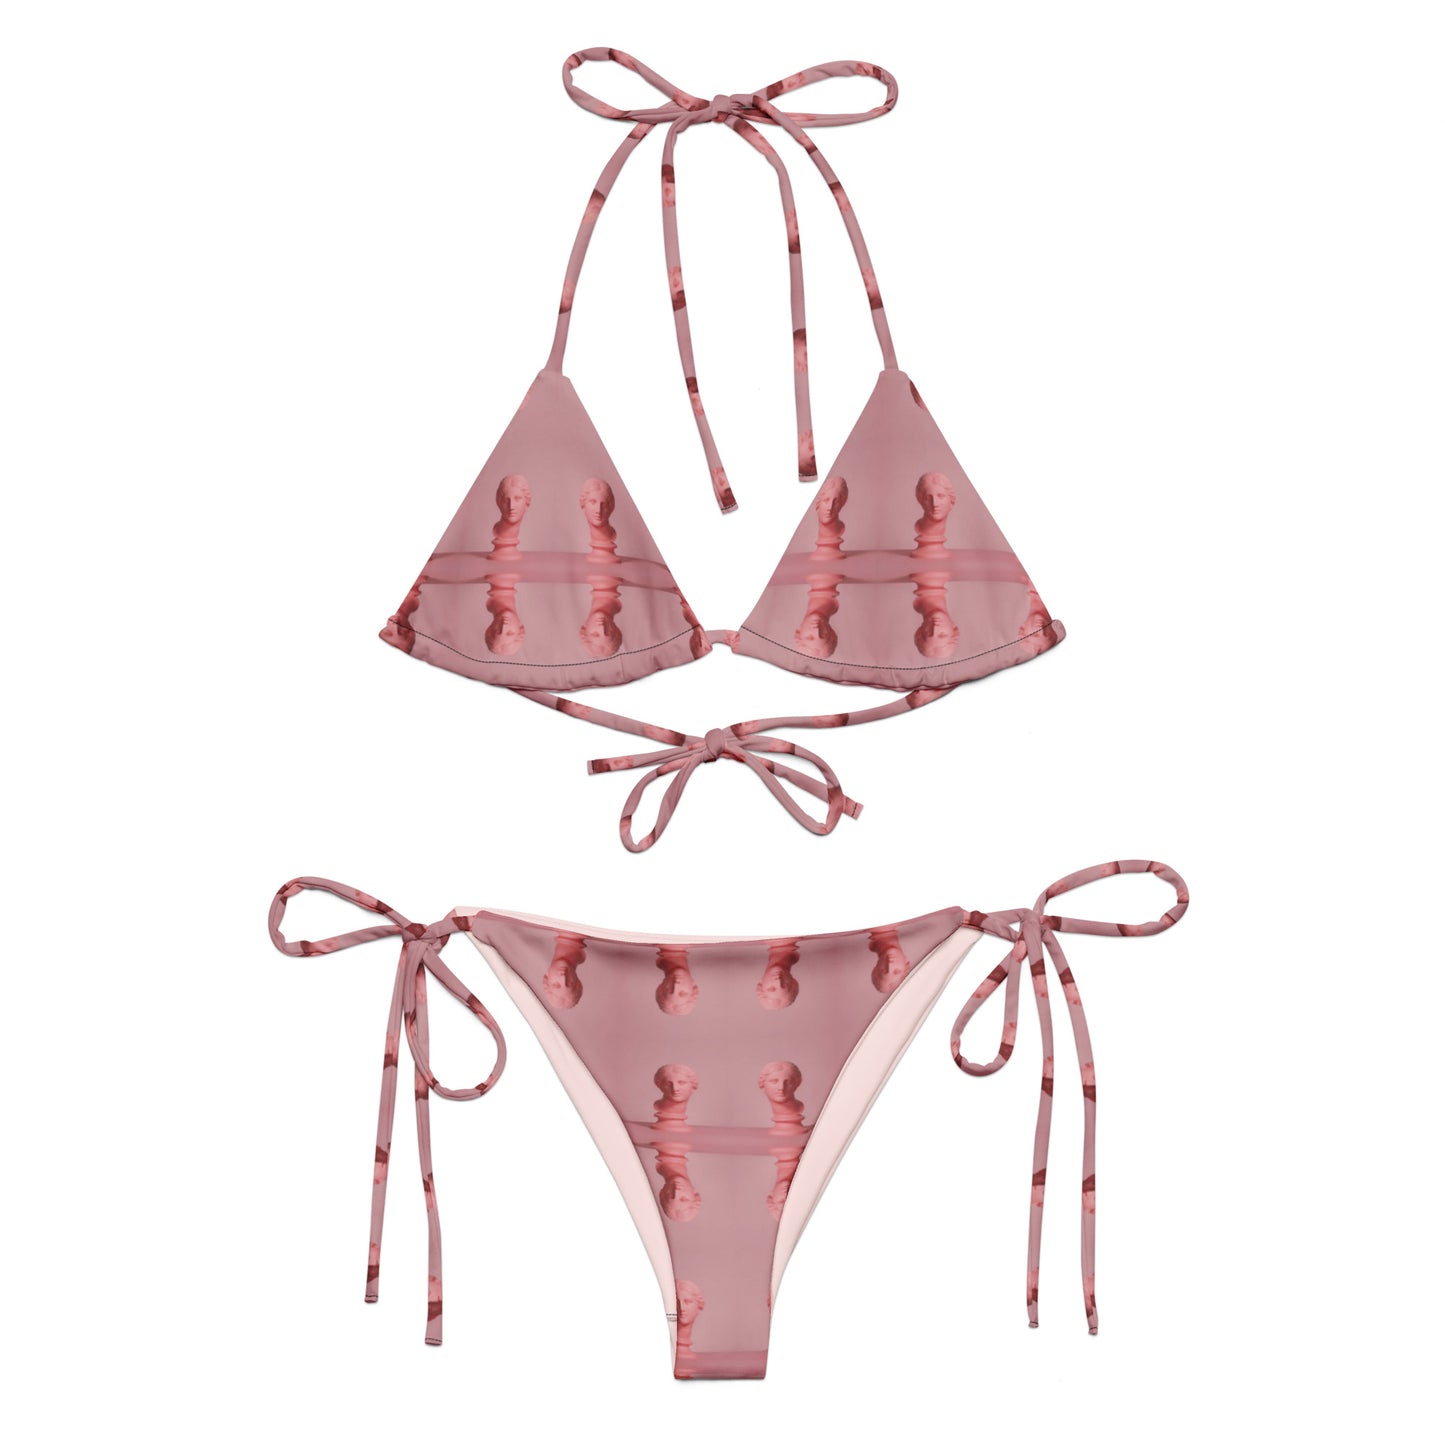 Enigma elegance: String Bikini - VZI Beachwear, Set, Removable padding, Soft and Strechy